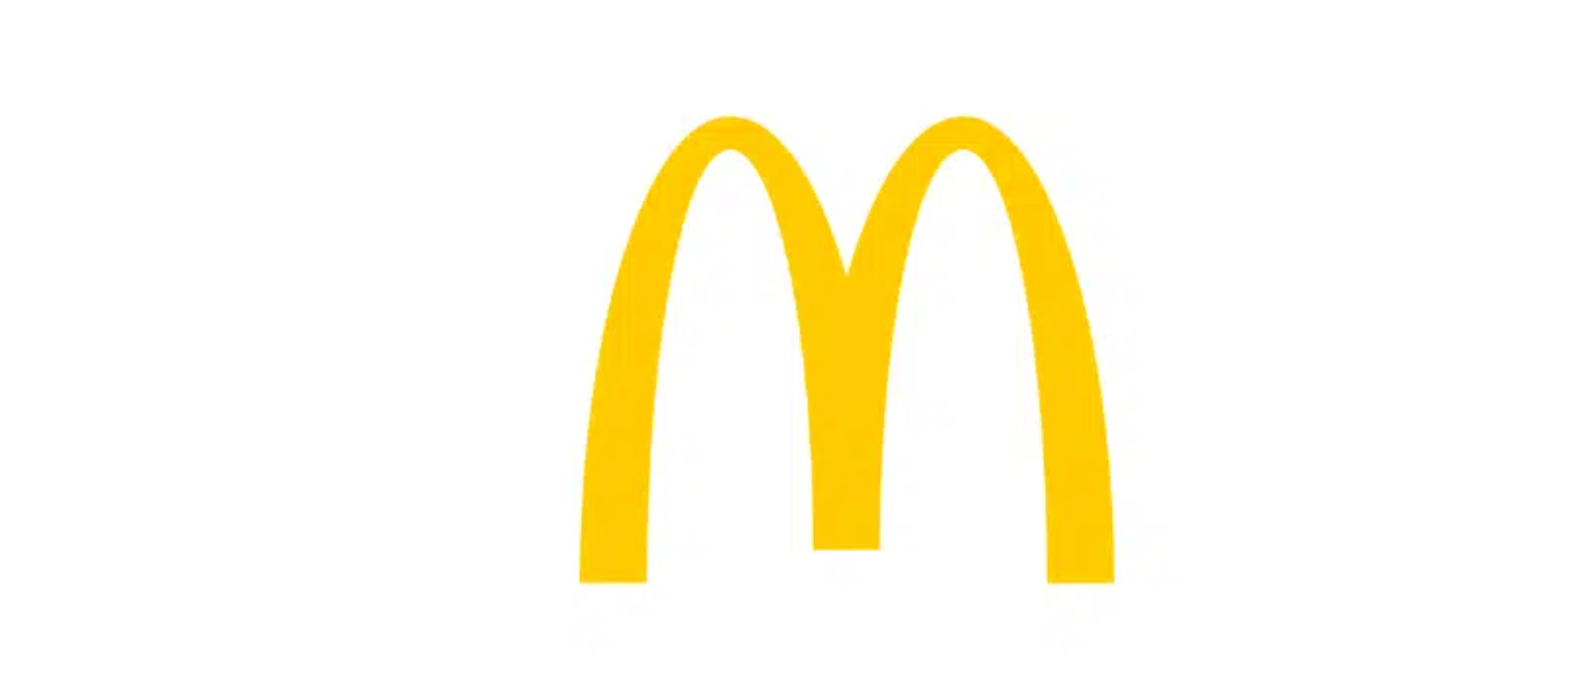 The McDonald's M